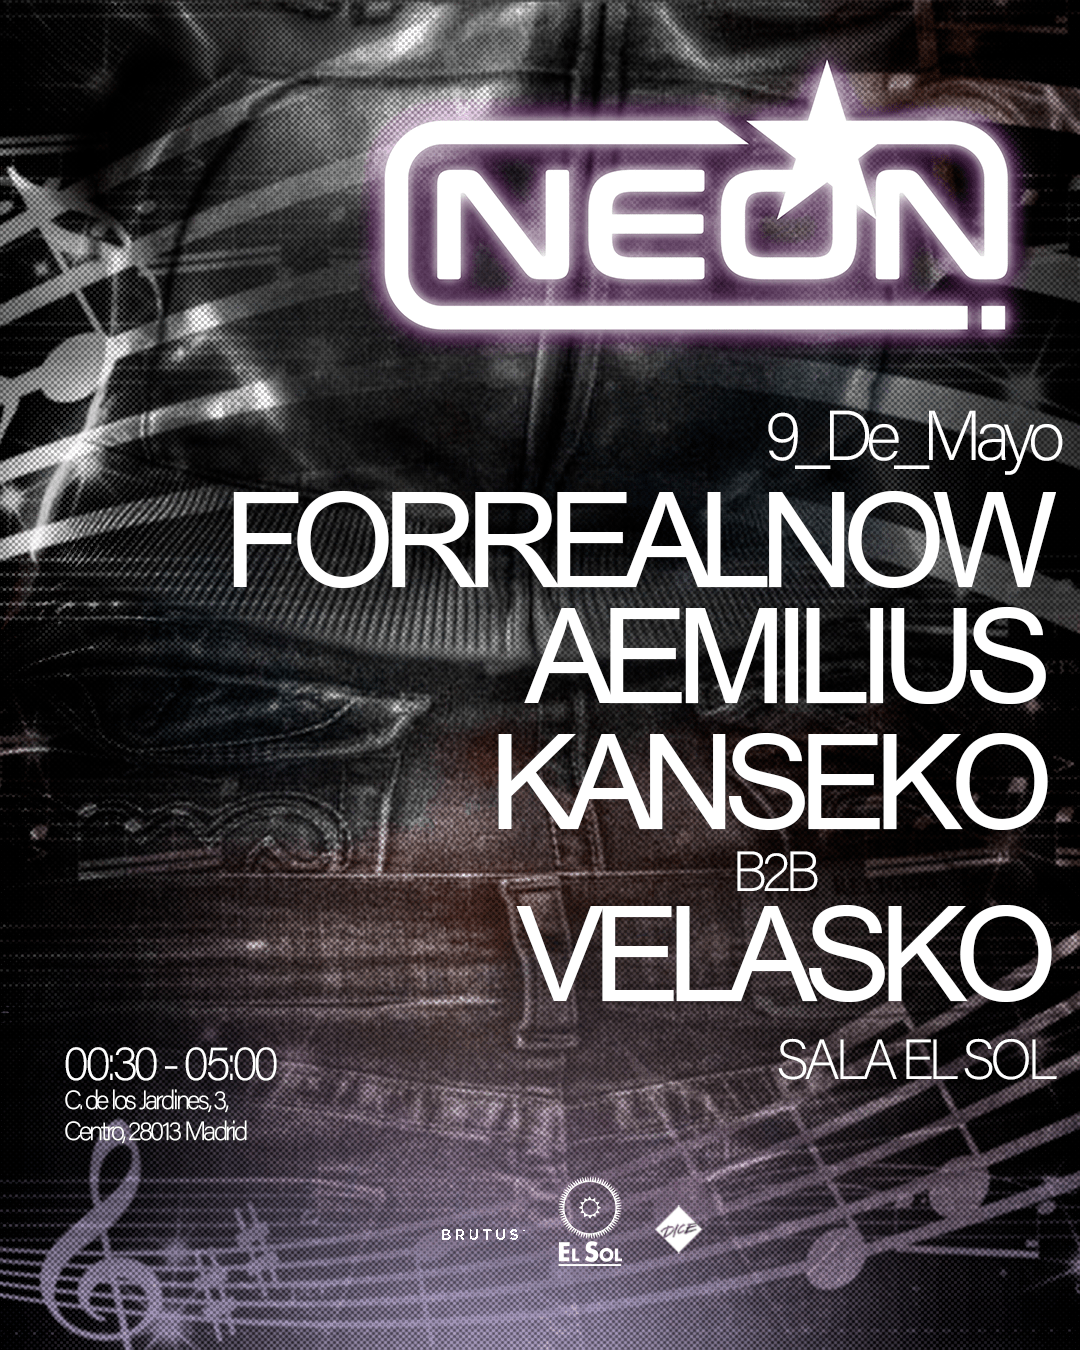 Neon StarClub: Forrealnow + Aemilius + Kanseko  + Velasko